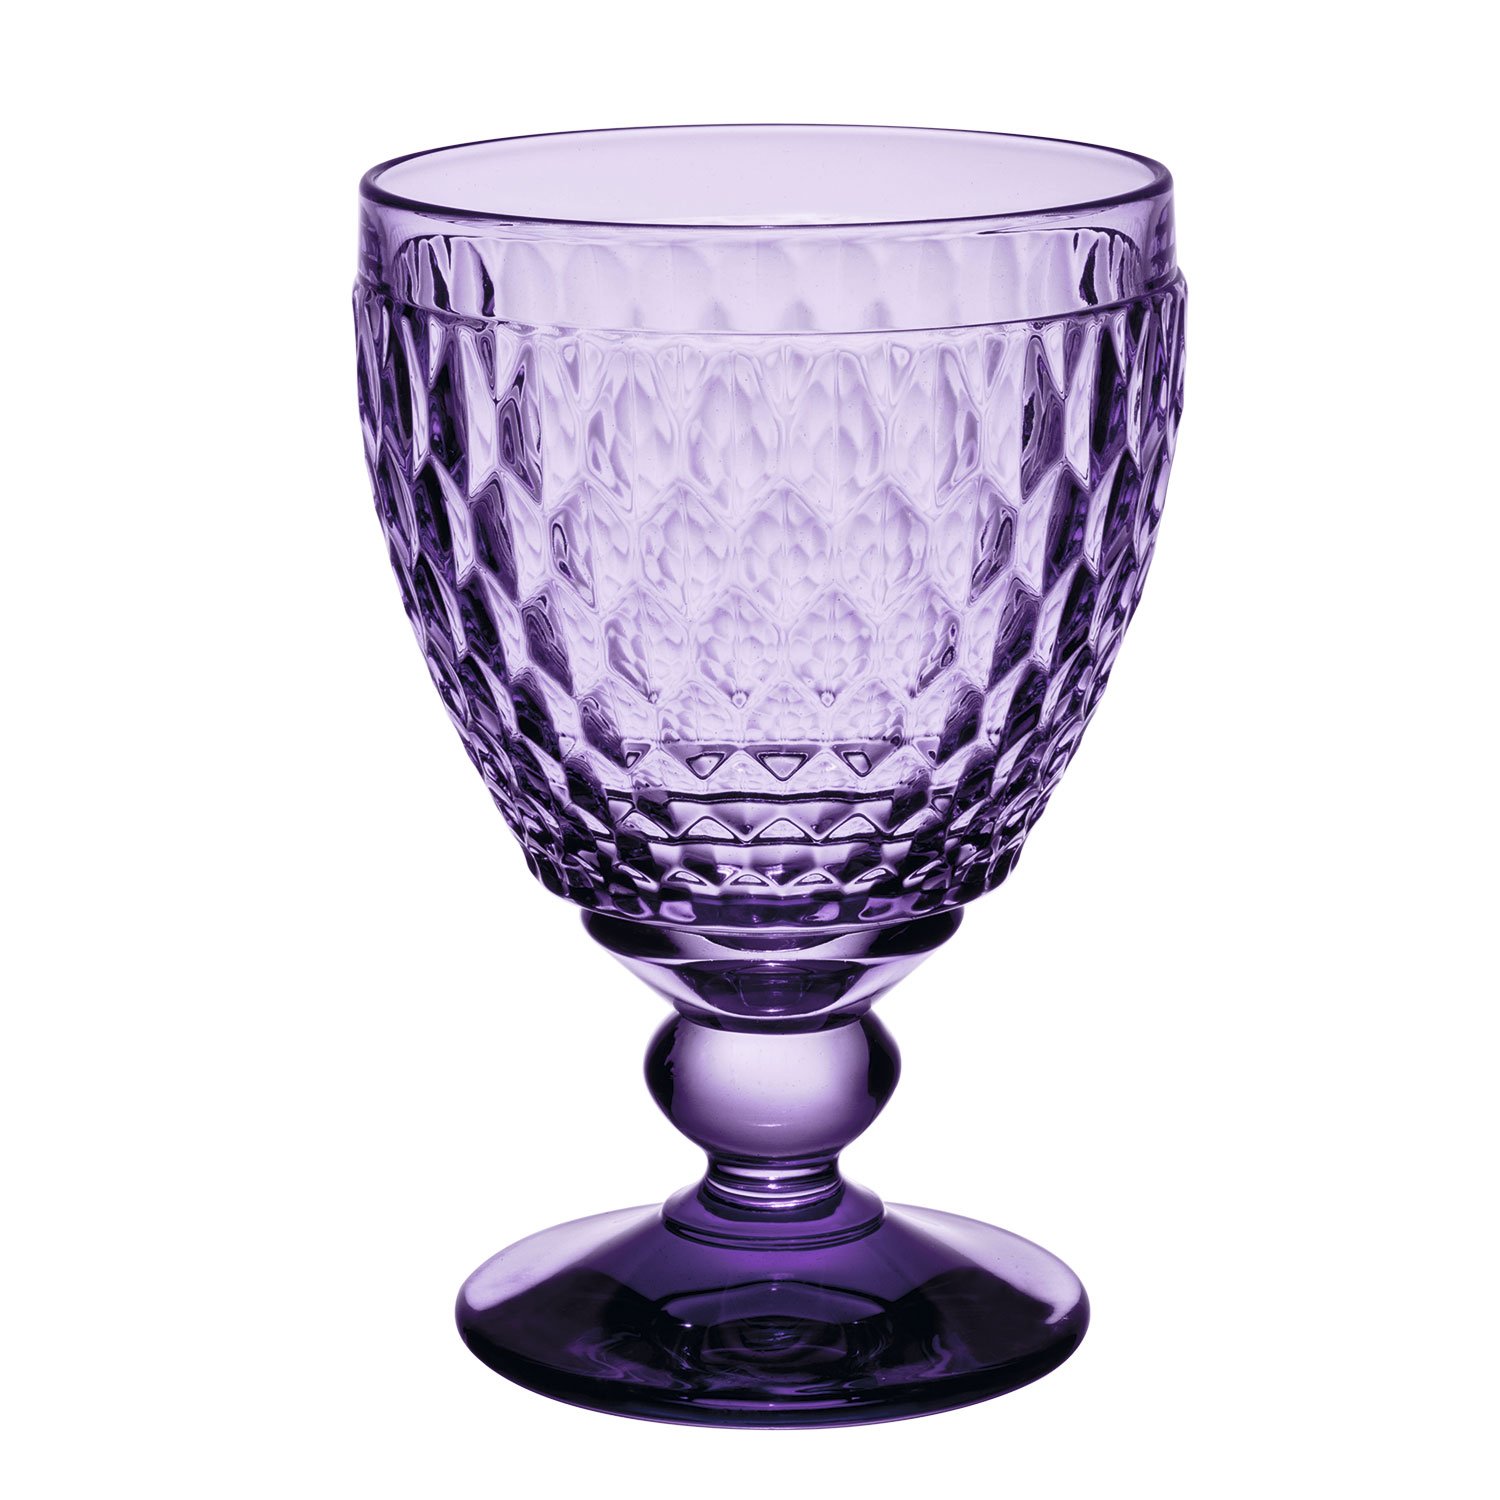 Boston Lavender Бокал для красного вина 132 мм объем 300 мл Villeroy & Boch
https://spb.v-b.ru
г.Санкт-Петербург
eshop@v-b.spb.ru
+7(812)3801977